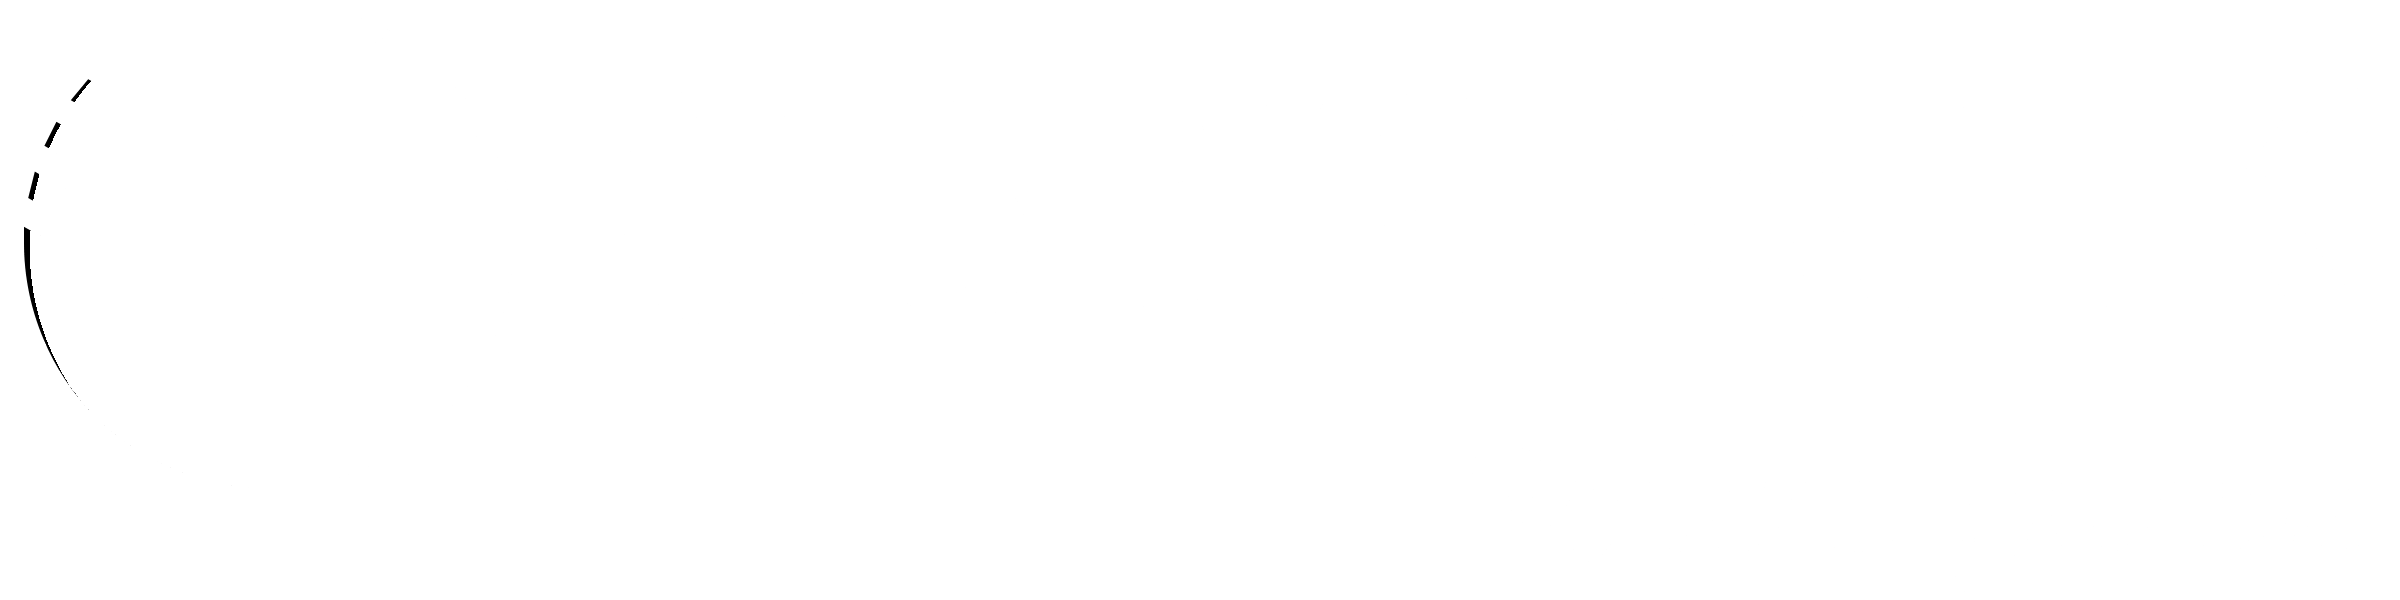 Sberbank Logo - Sberbank Logo PNG Transparent & SVG Vector